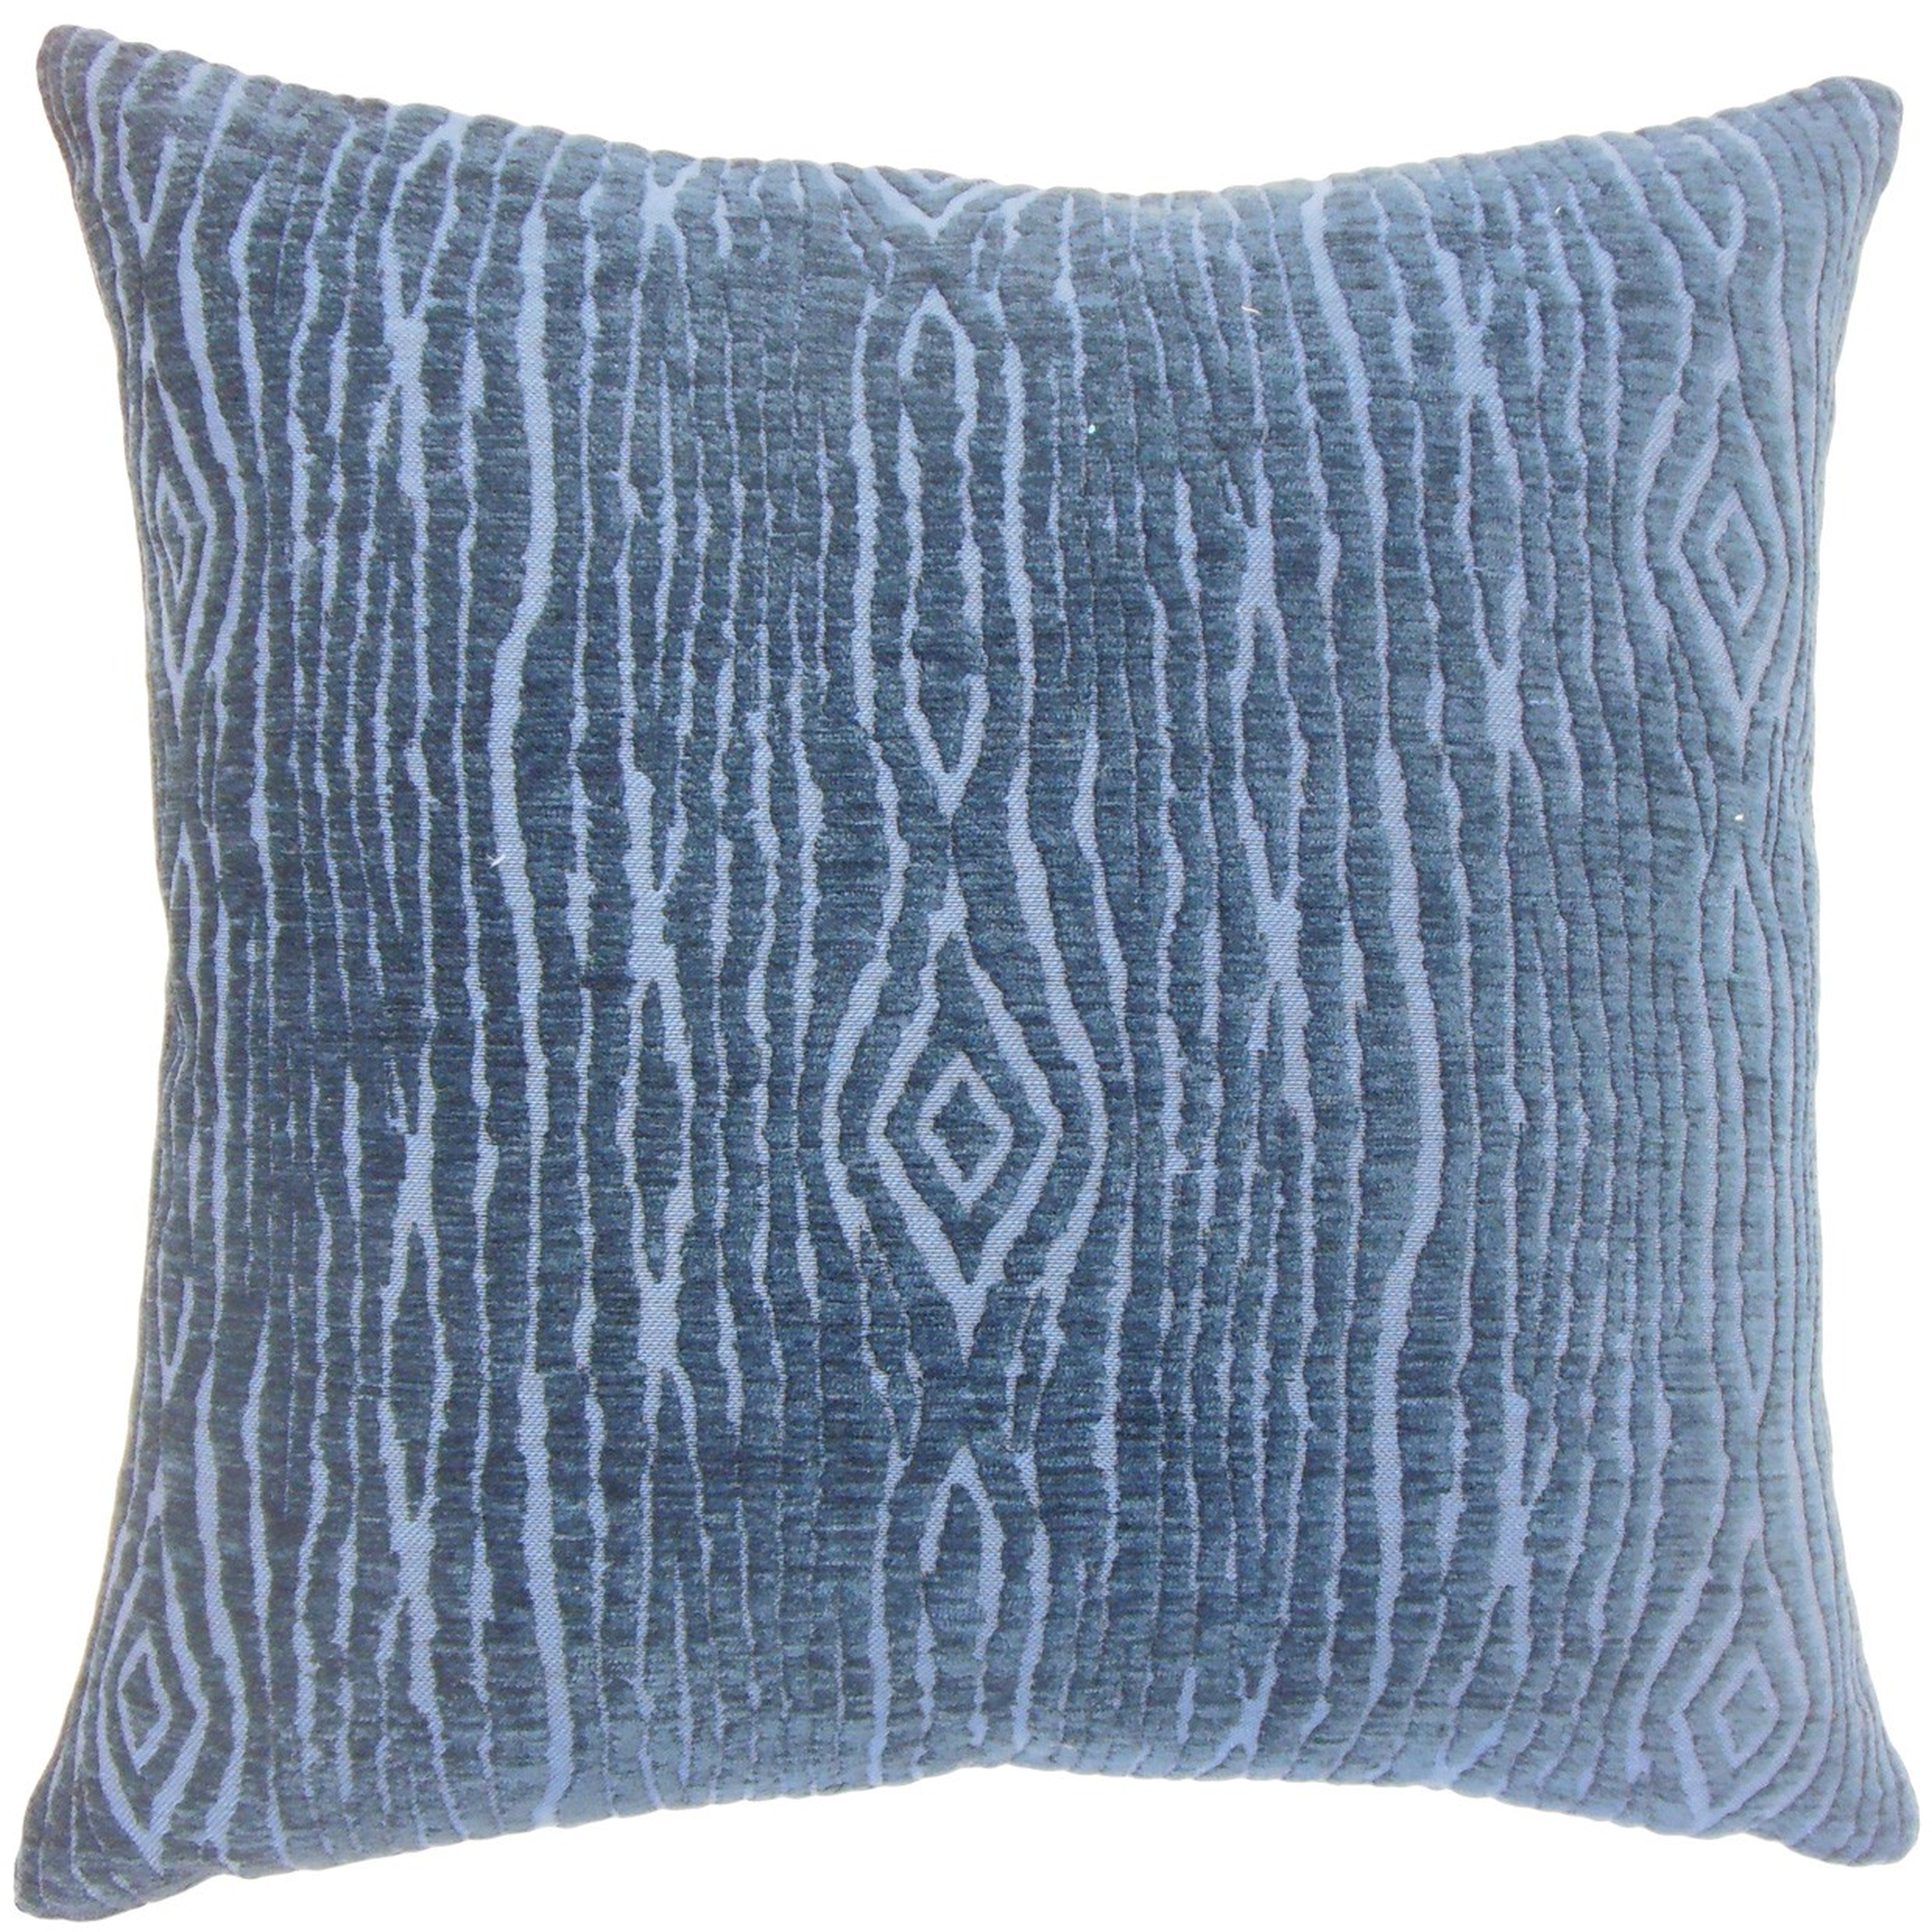 Indira Solid Pillow - 18" x 18" with Down Insert - Linen & Seam